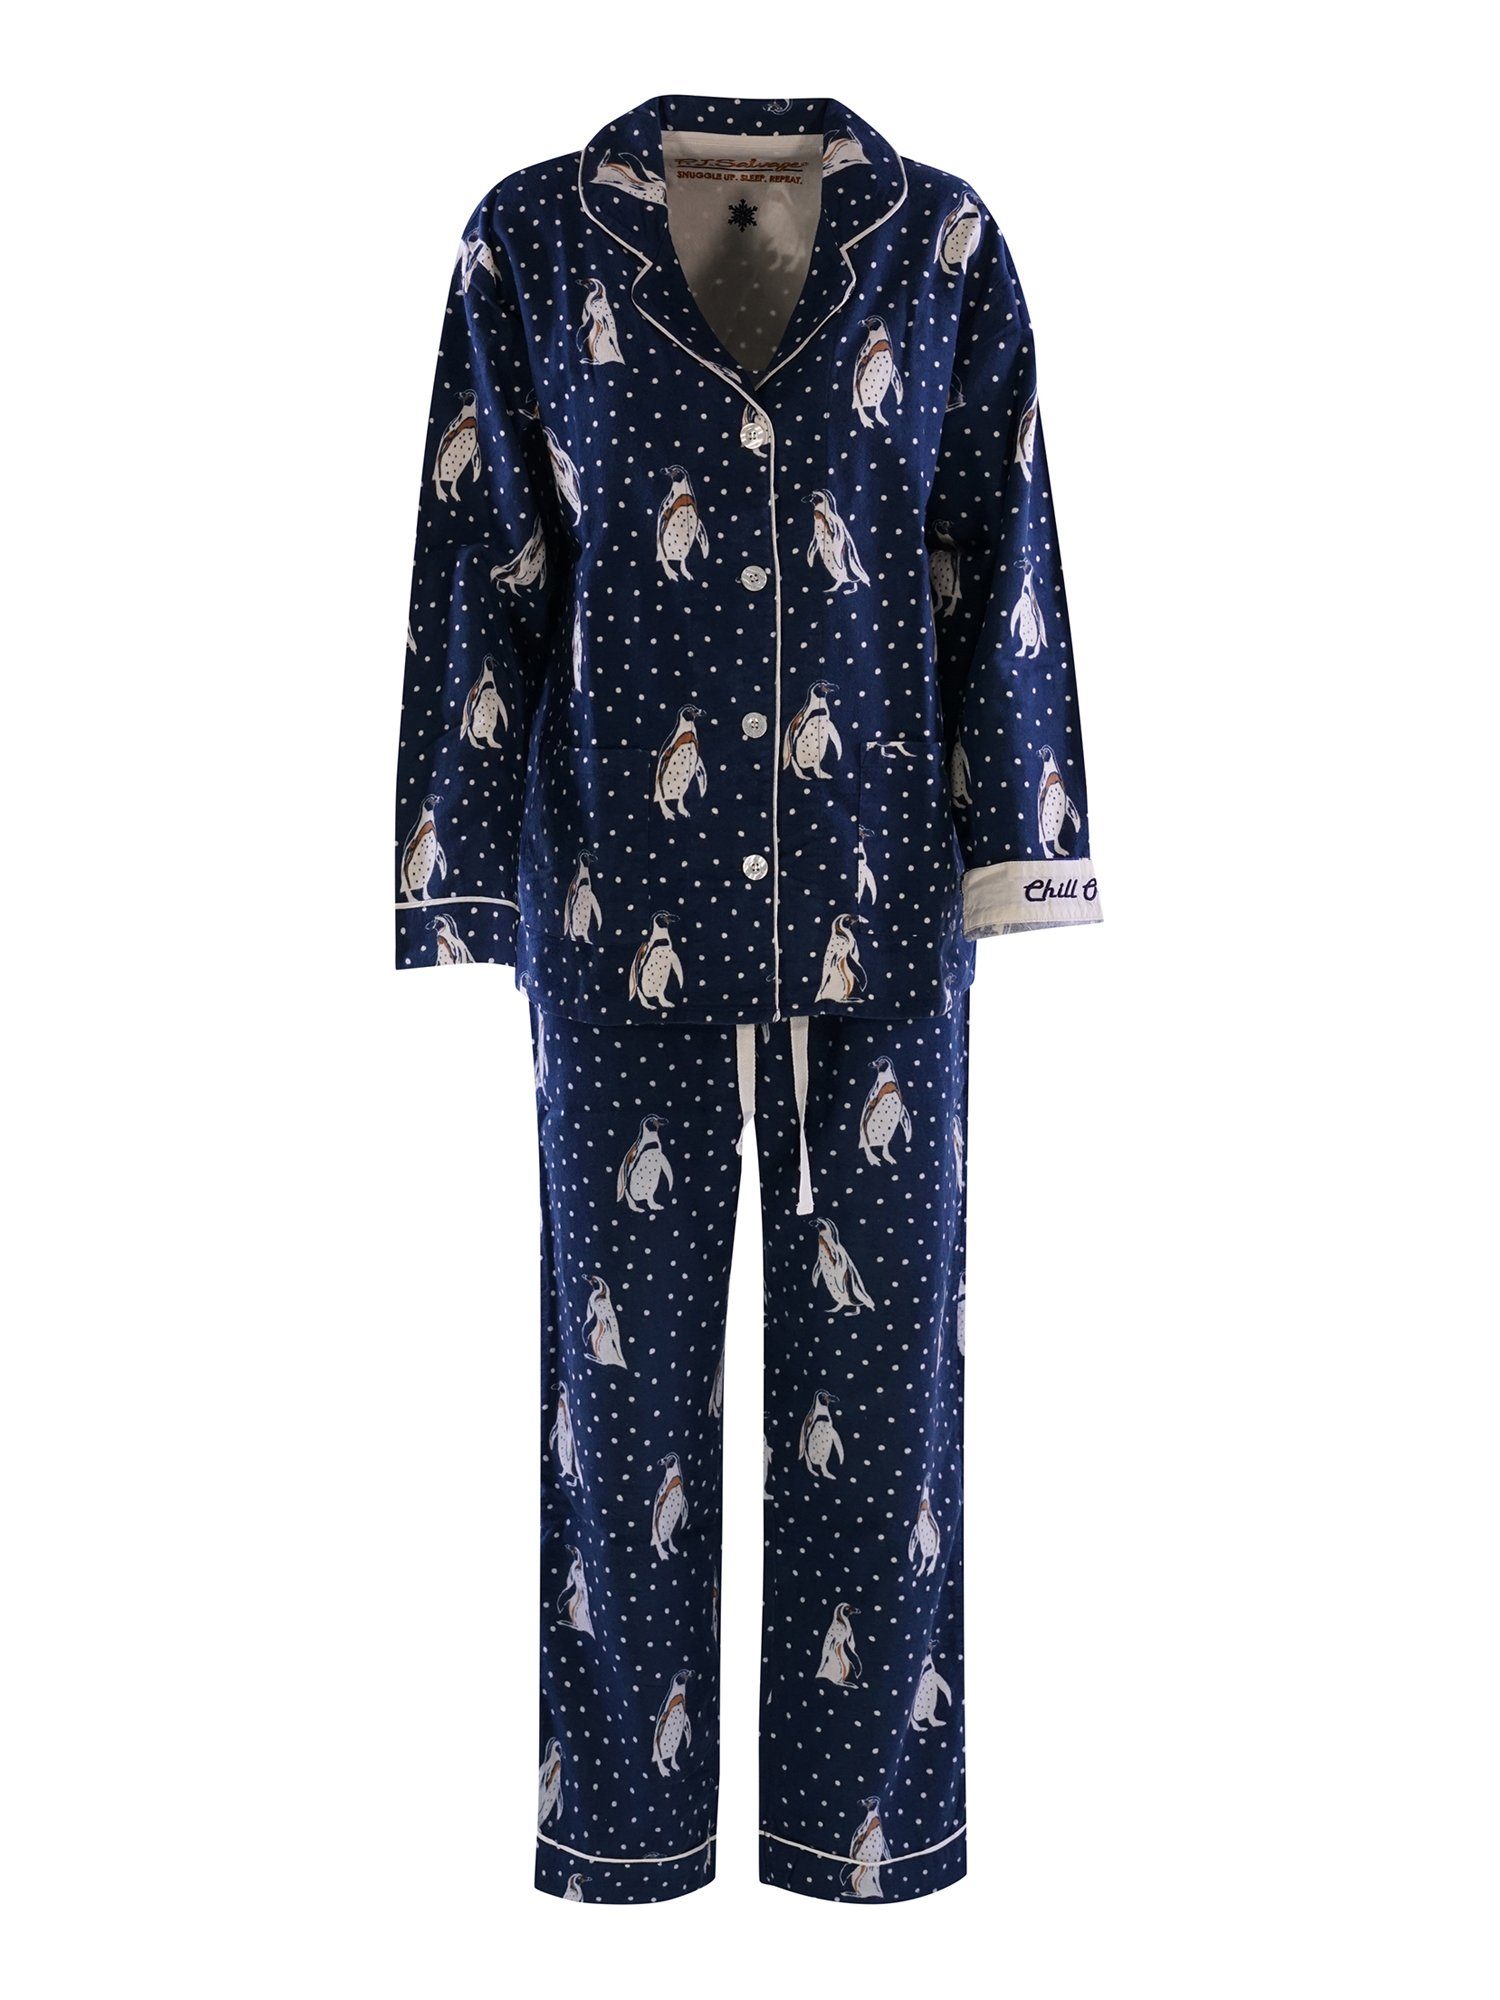 PJ Salvage Pyjama Flanells schlafanzug pyjama schlafmode blaugrün